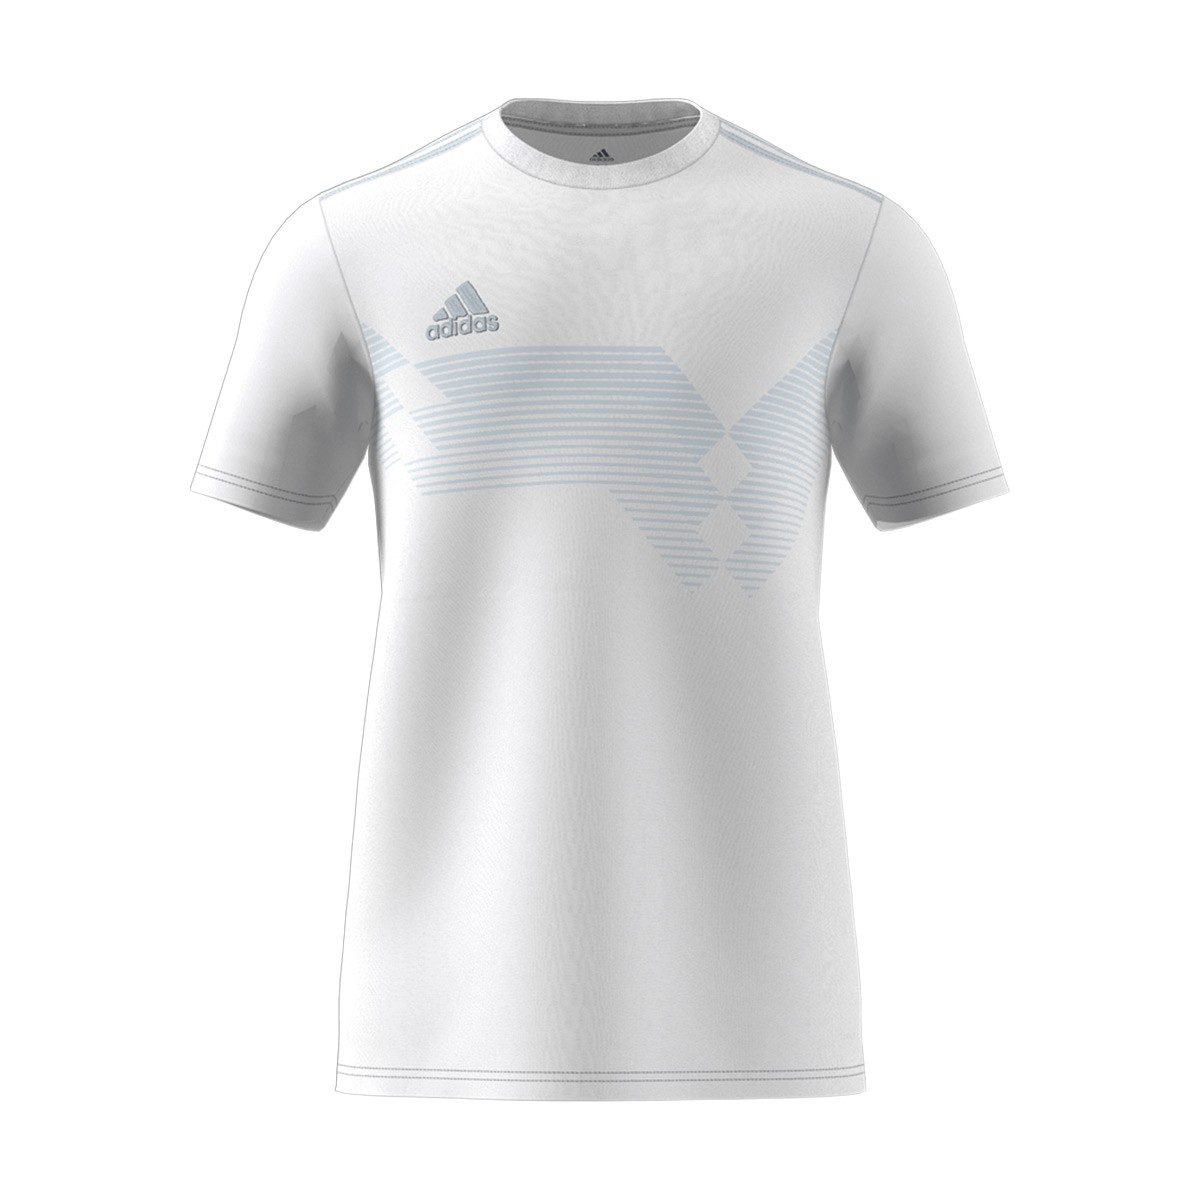 Jersey adidas Campeon 19 White - Football store Fútbol Emotion